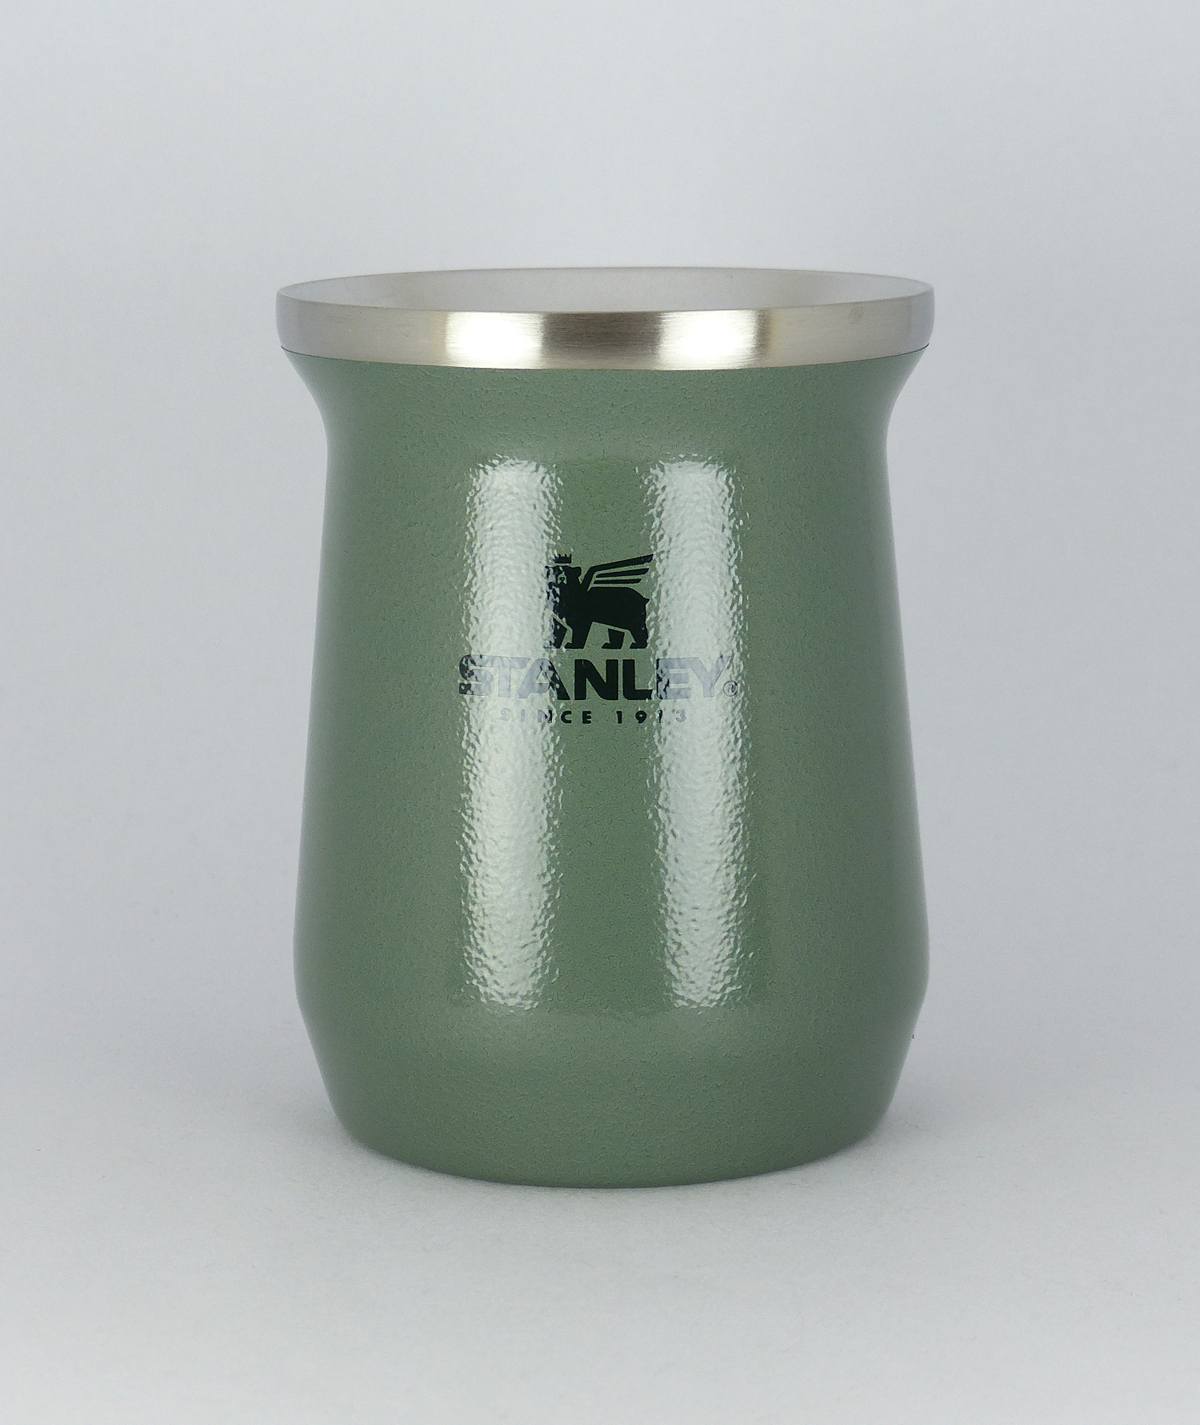 Original Thermal Stanley Classic Mate Cup - 236 ml - Blue